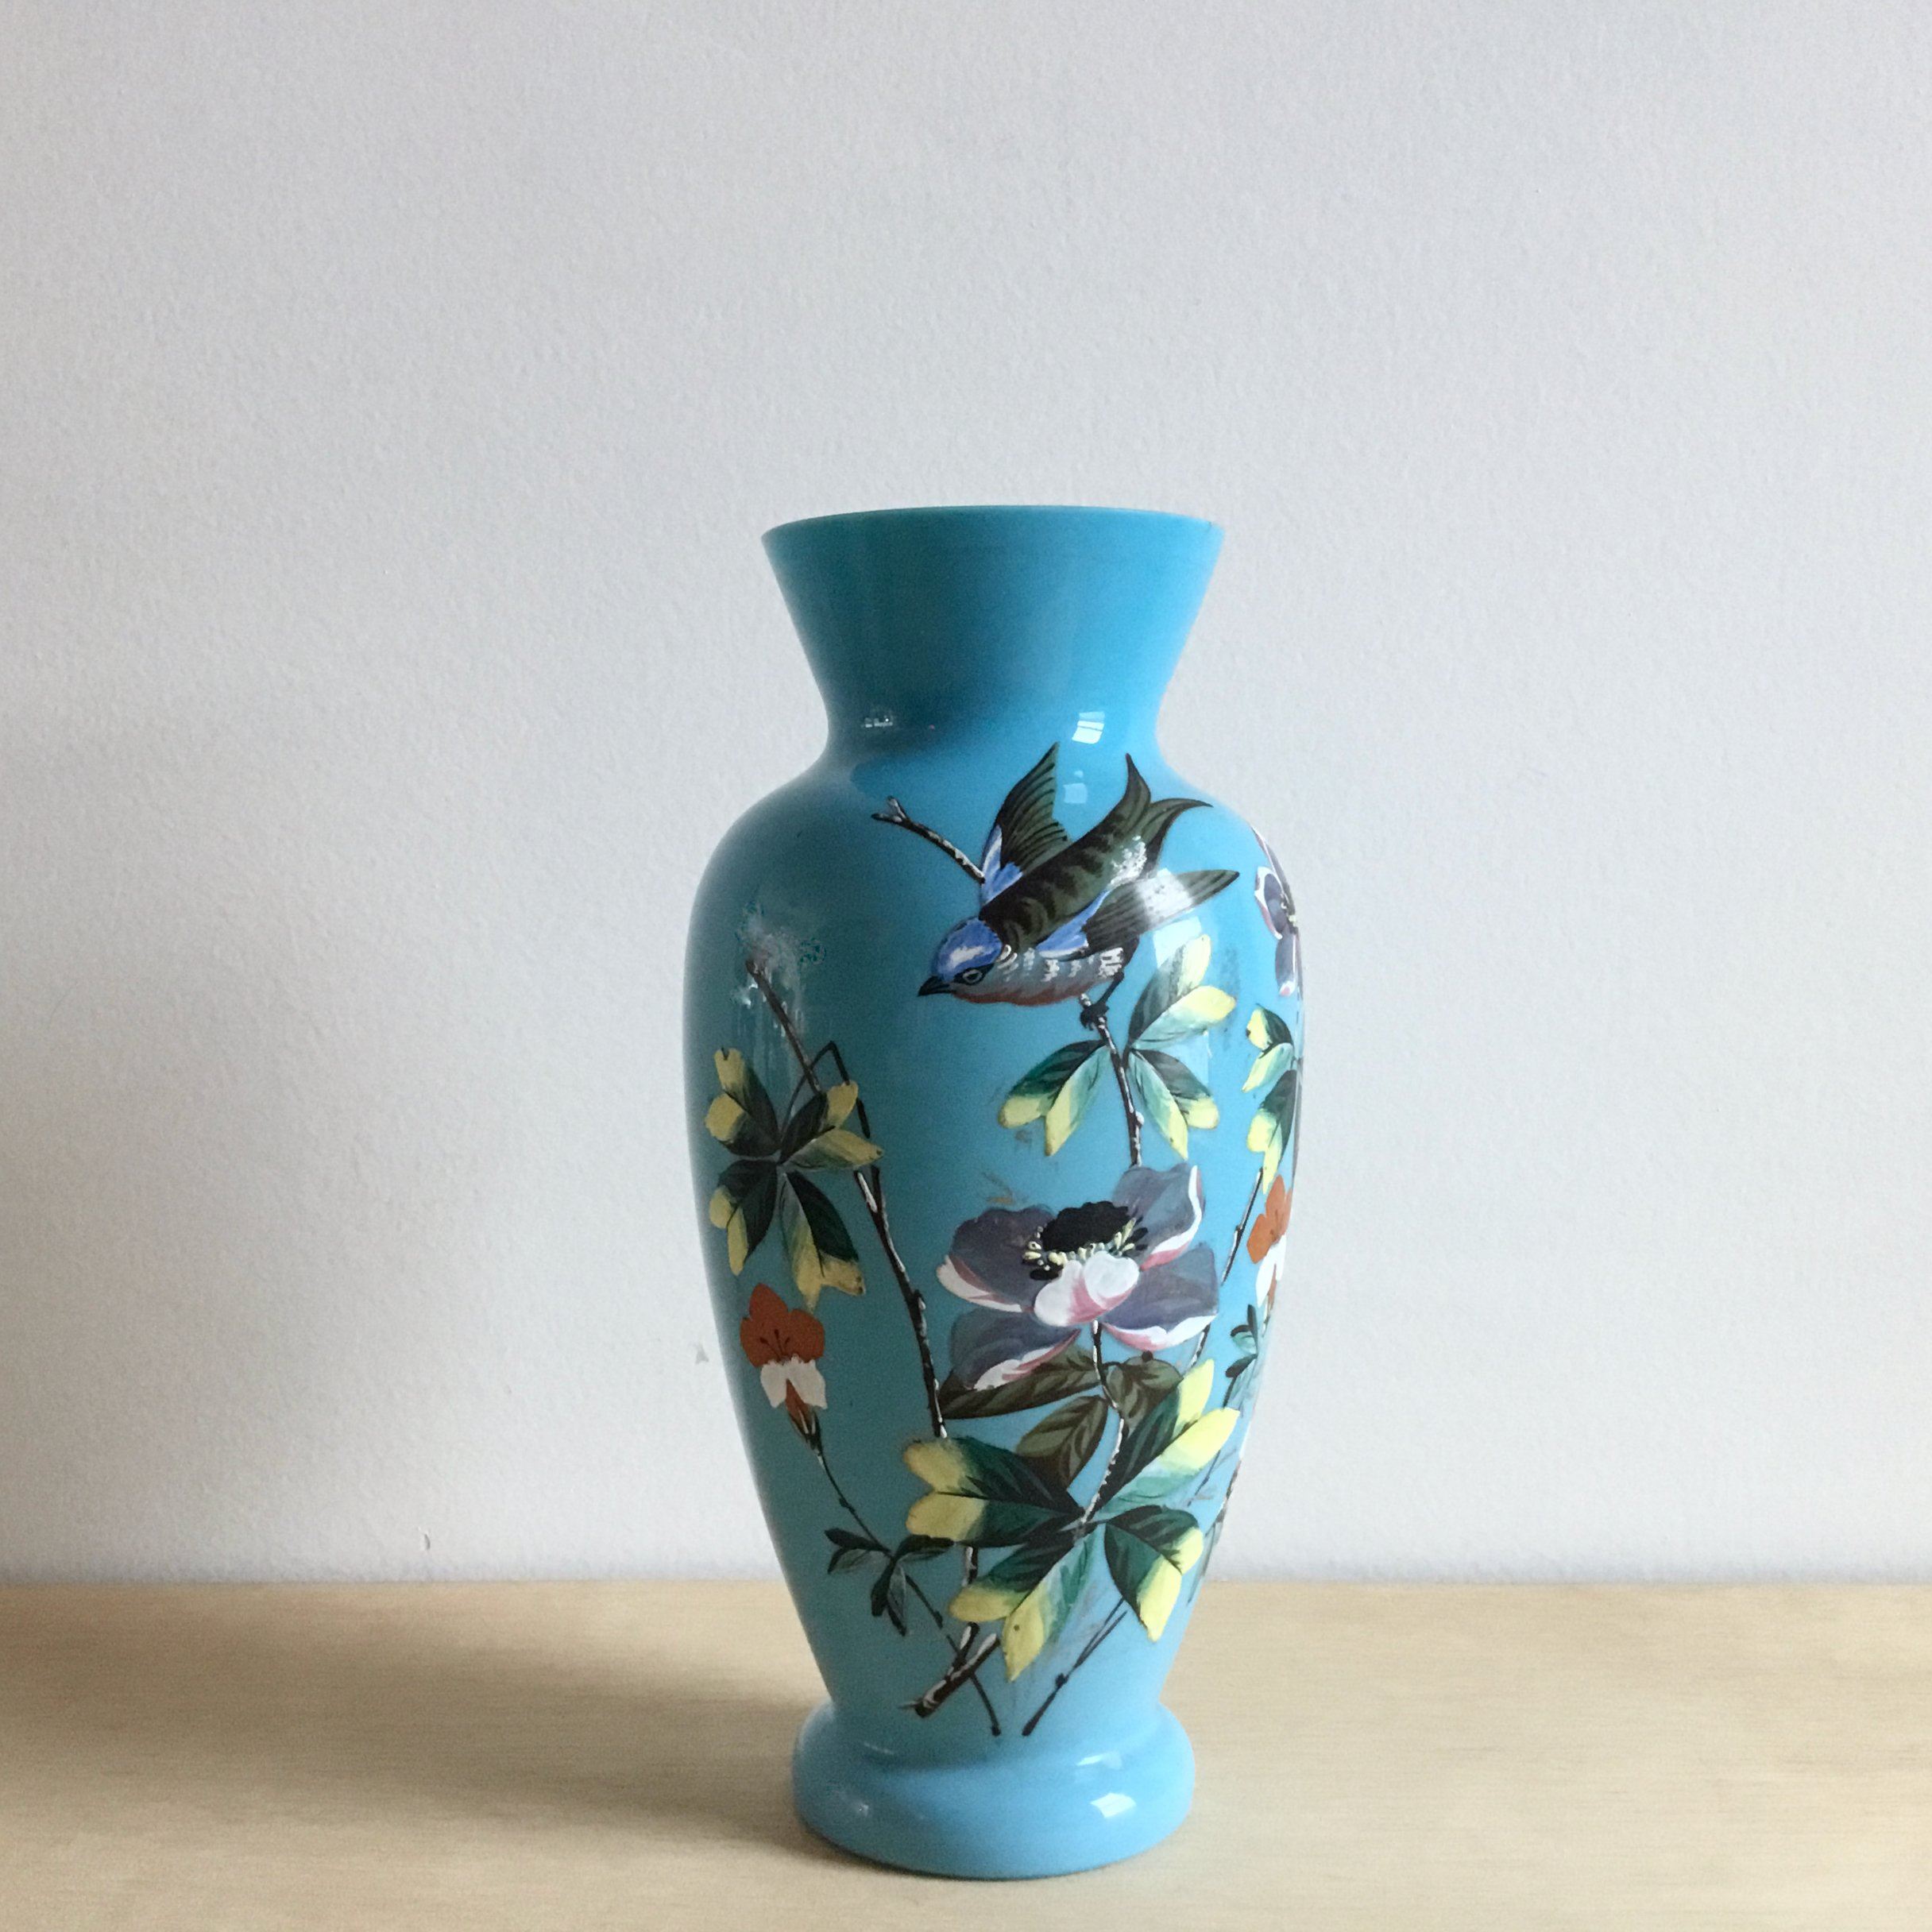 Victorian hand-painted Bristol-inspired glass vase